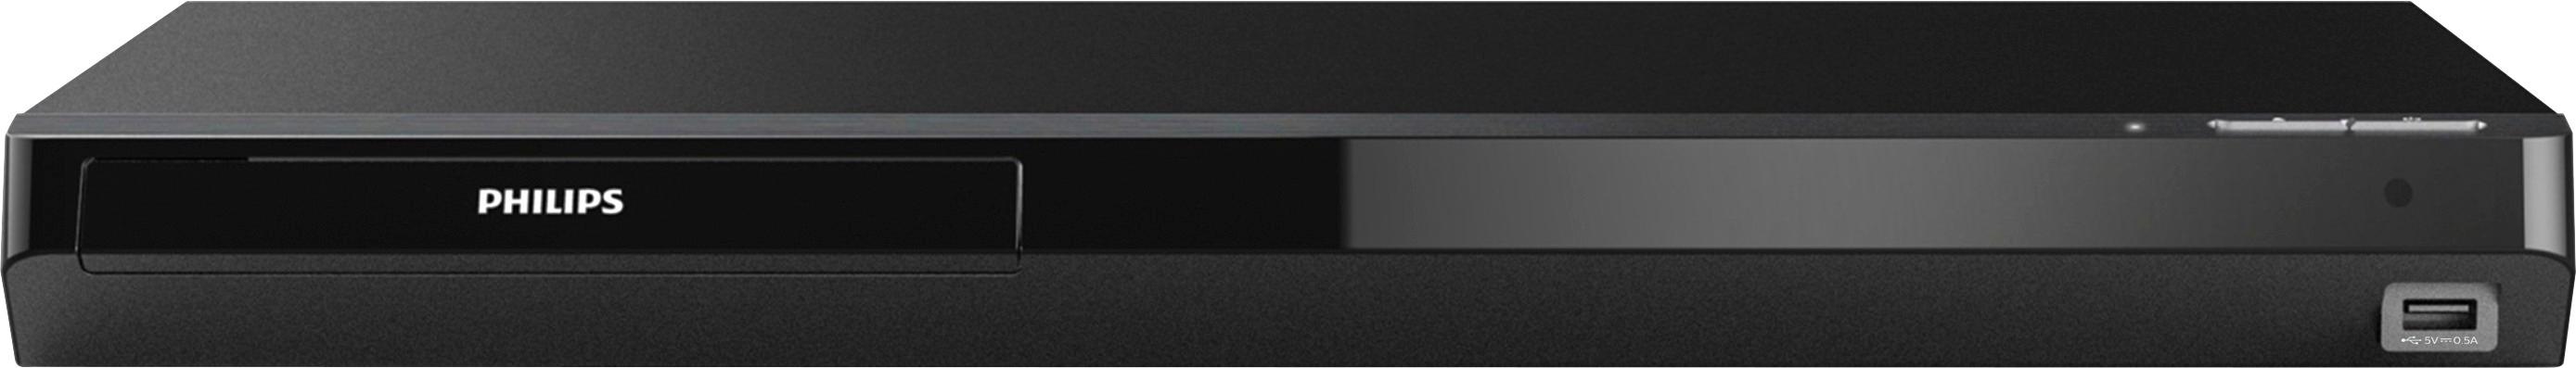 Fragrant Orbit Banyan Customer Reviews: Philips Streaming 4K Ultra HD Wi-Fi Built-In Blu-ray  Player Black BDP7502 - Best Buy